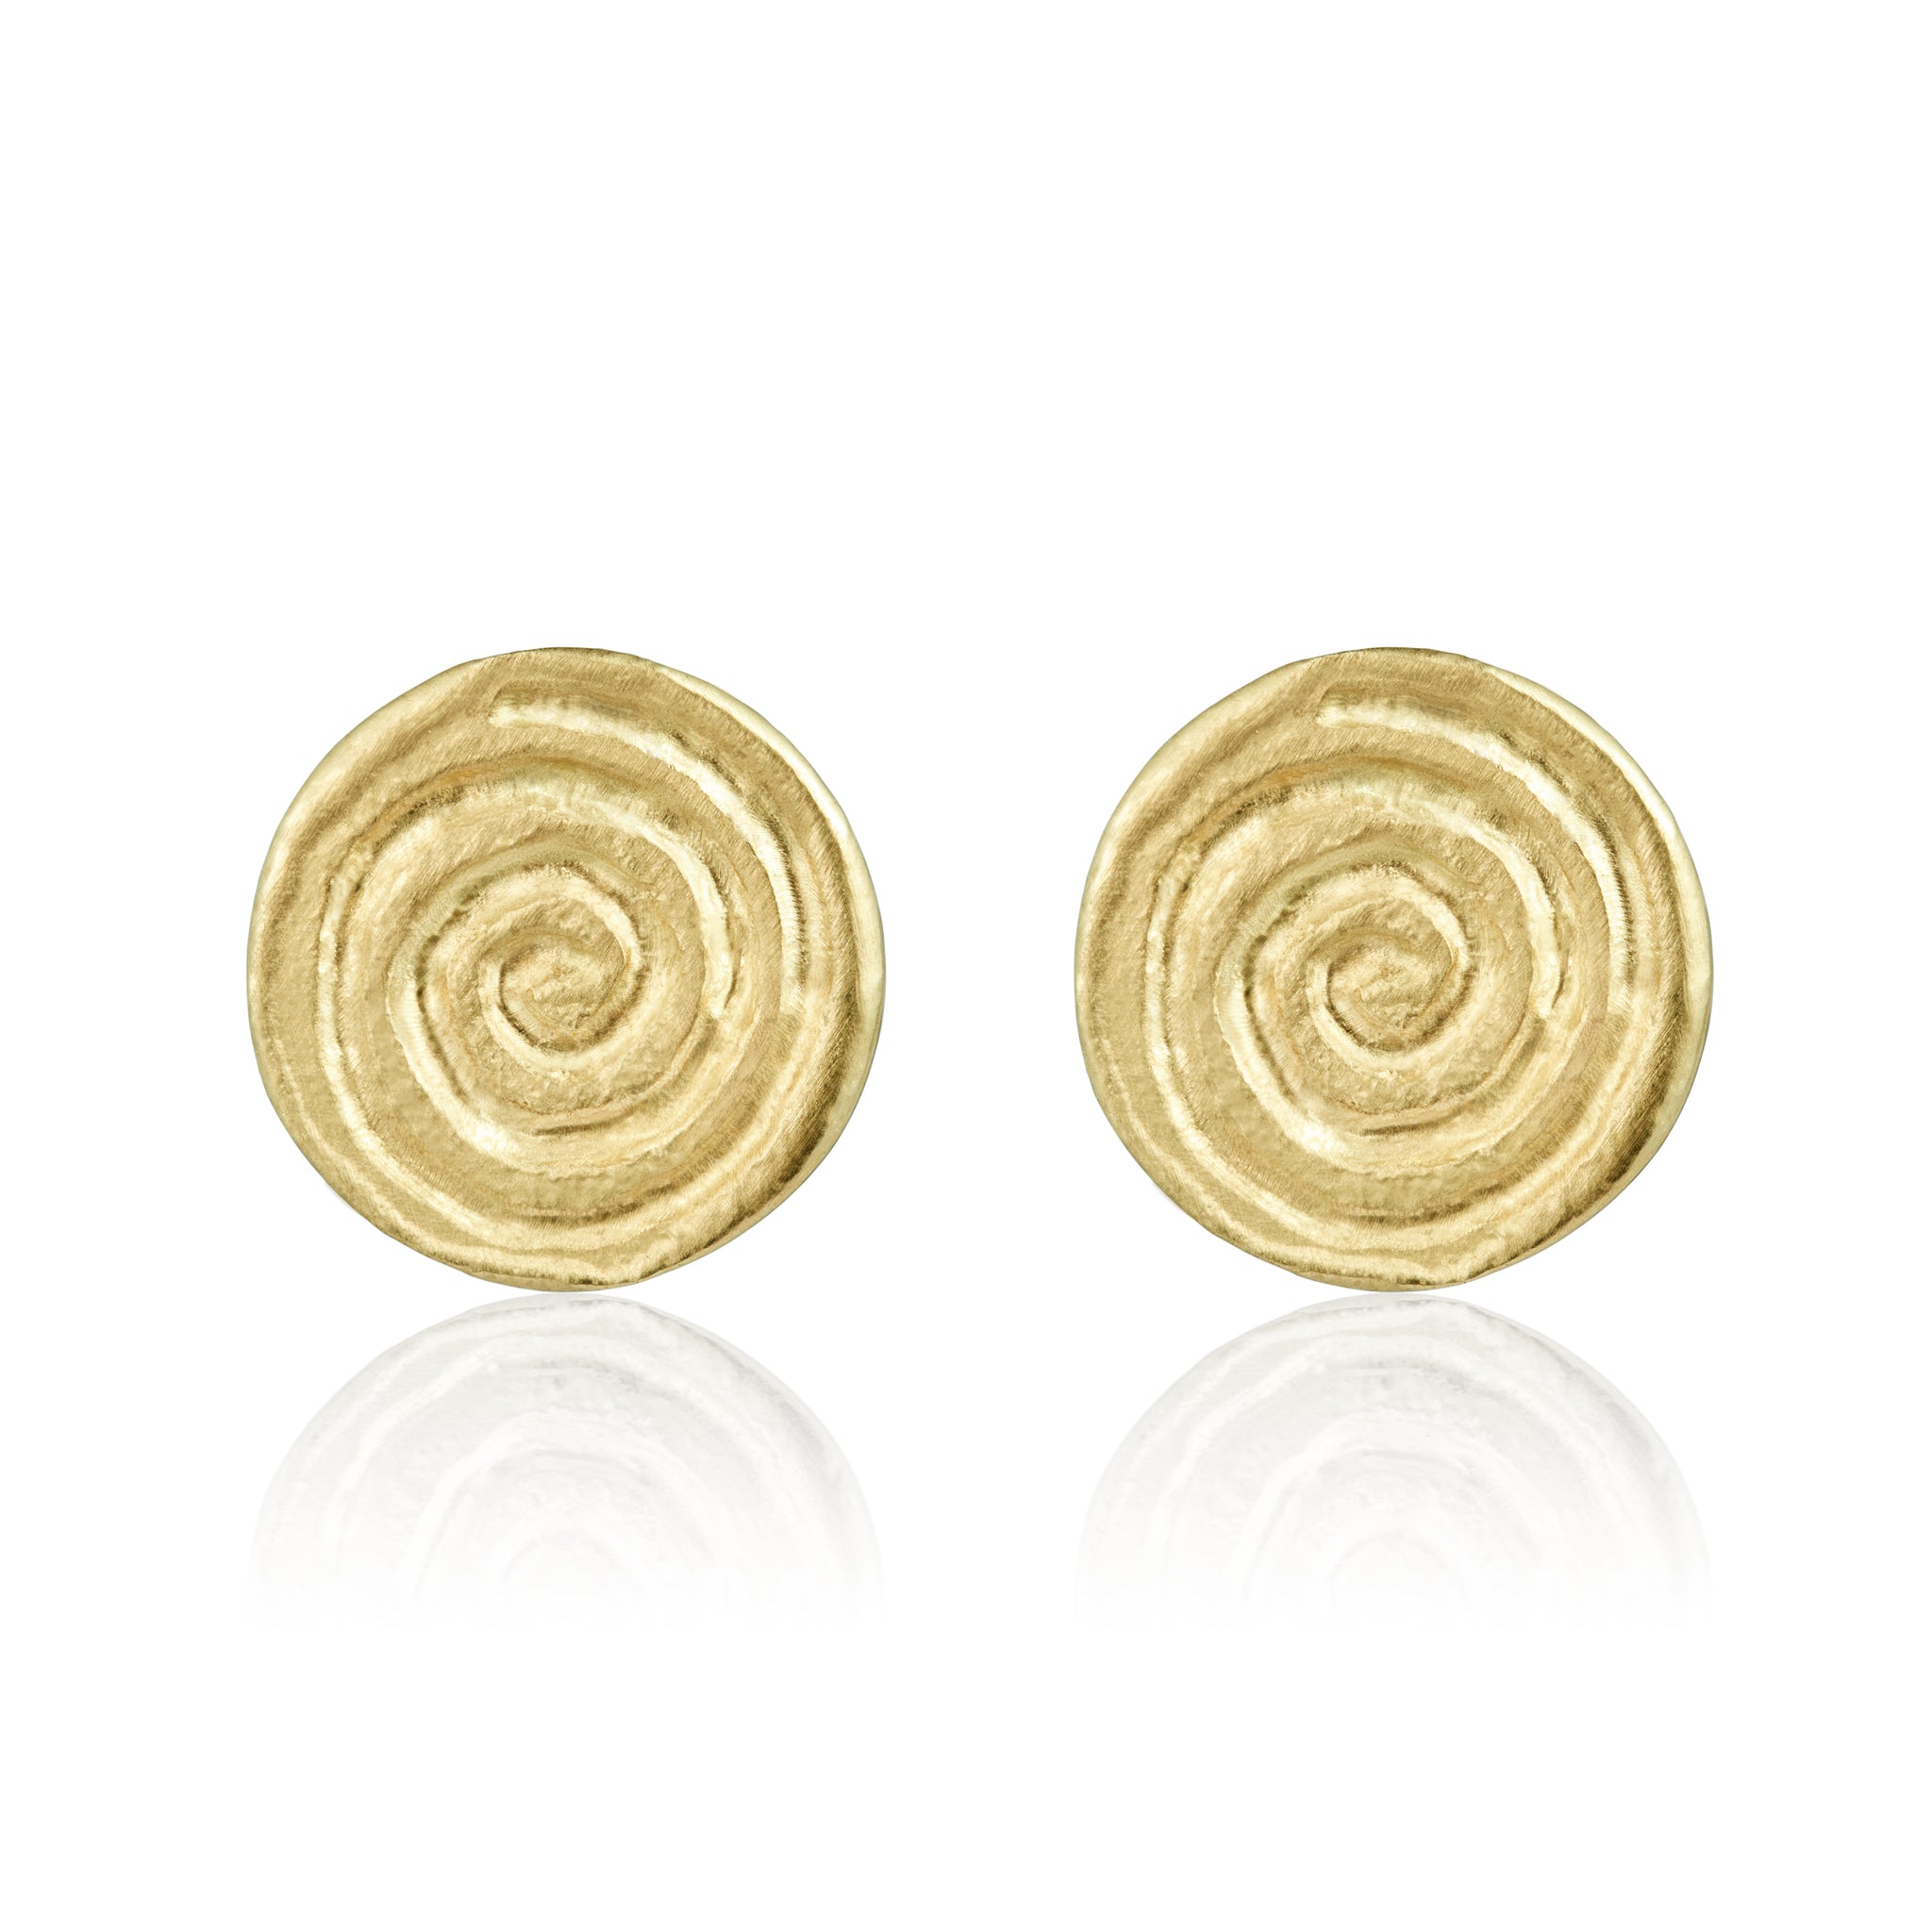 Infinity Spiral: Gold Stud Earrings - Minka Jewels